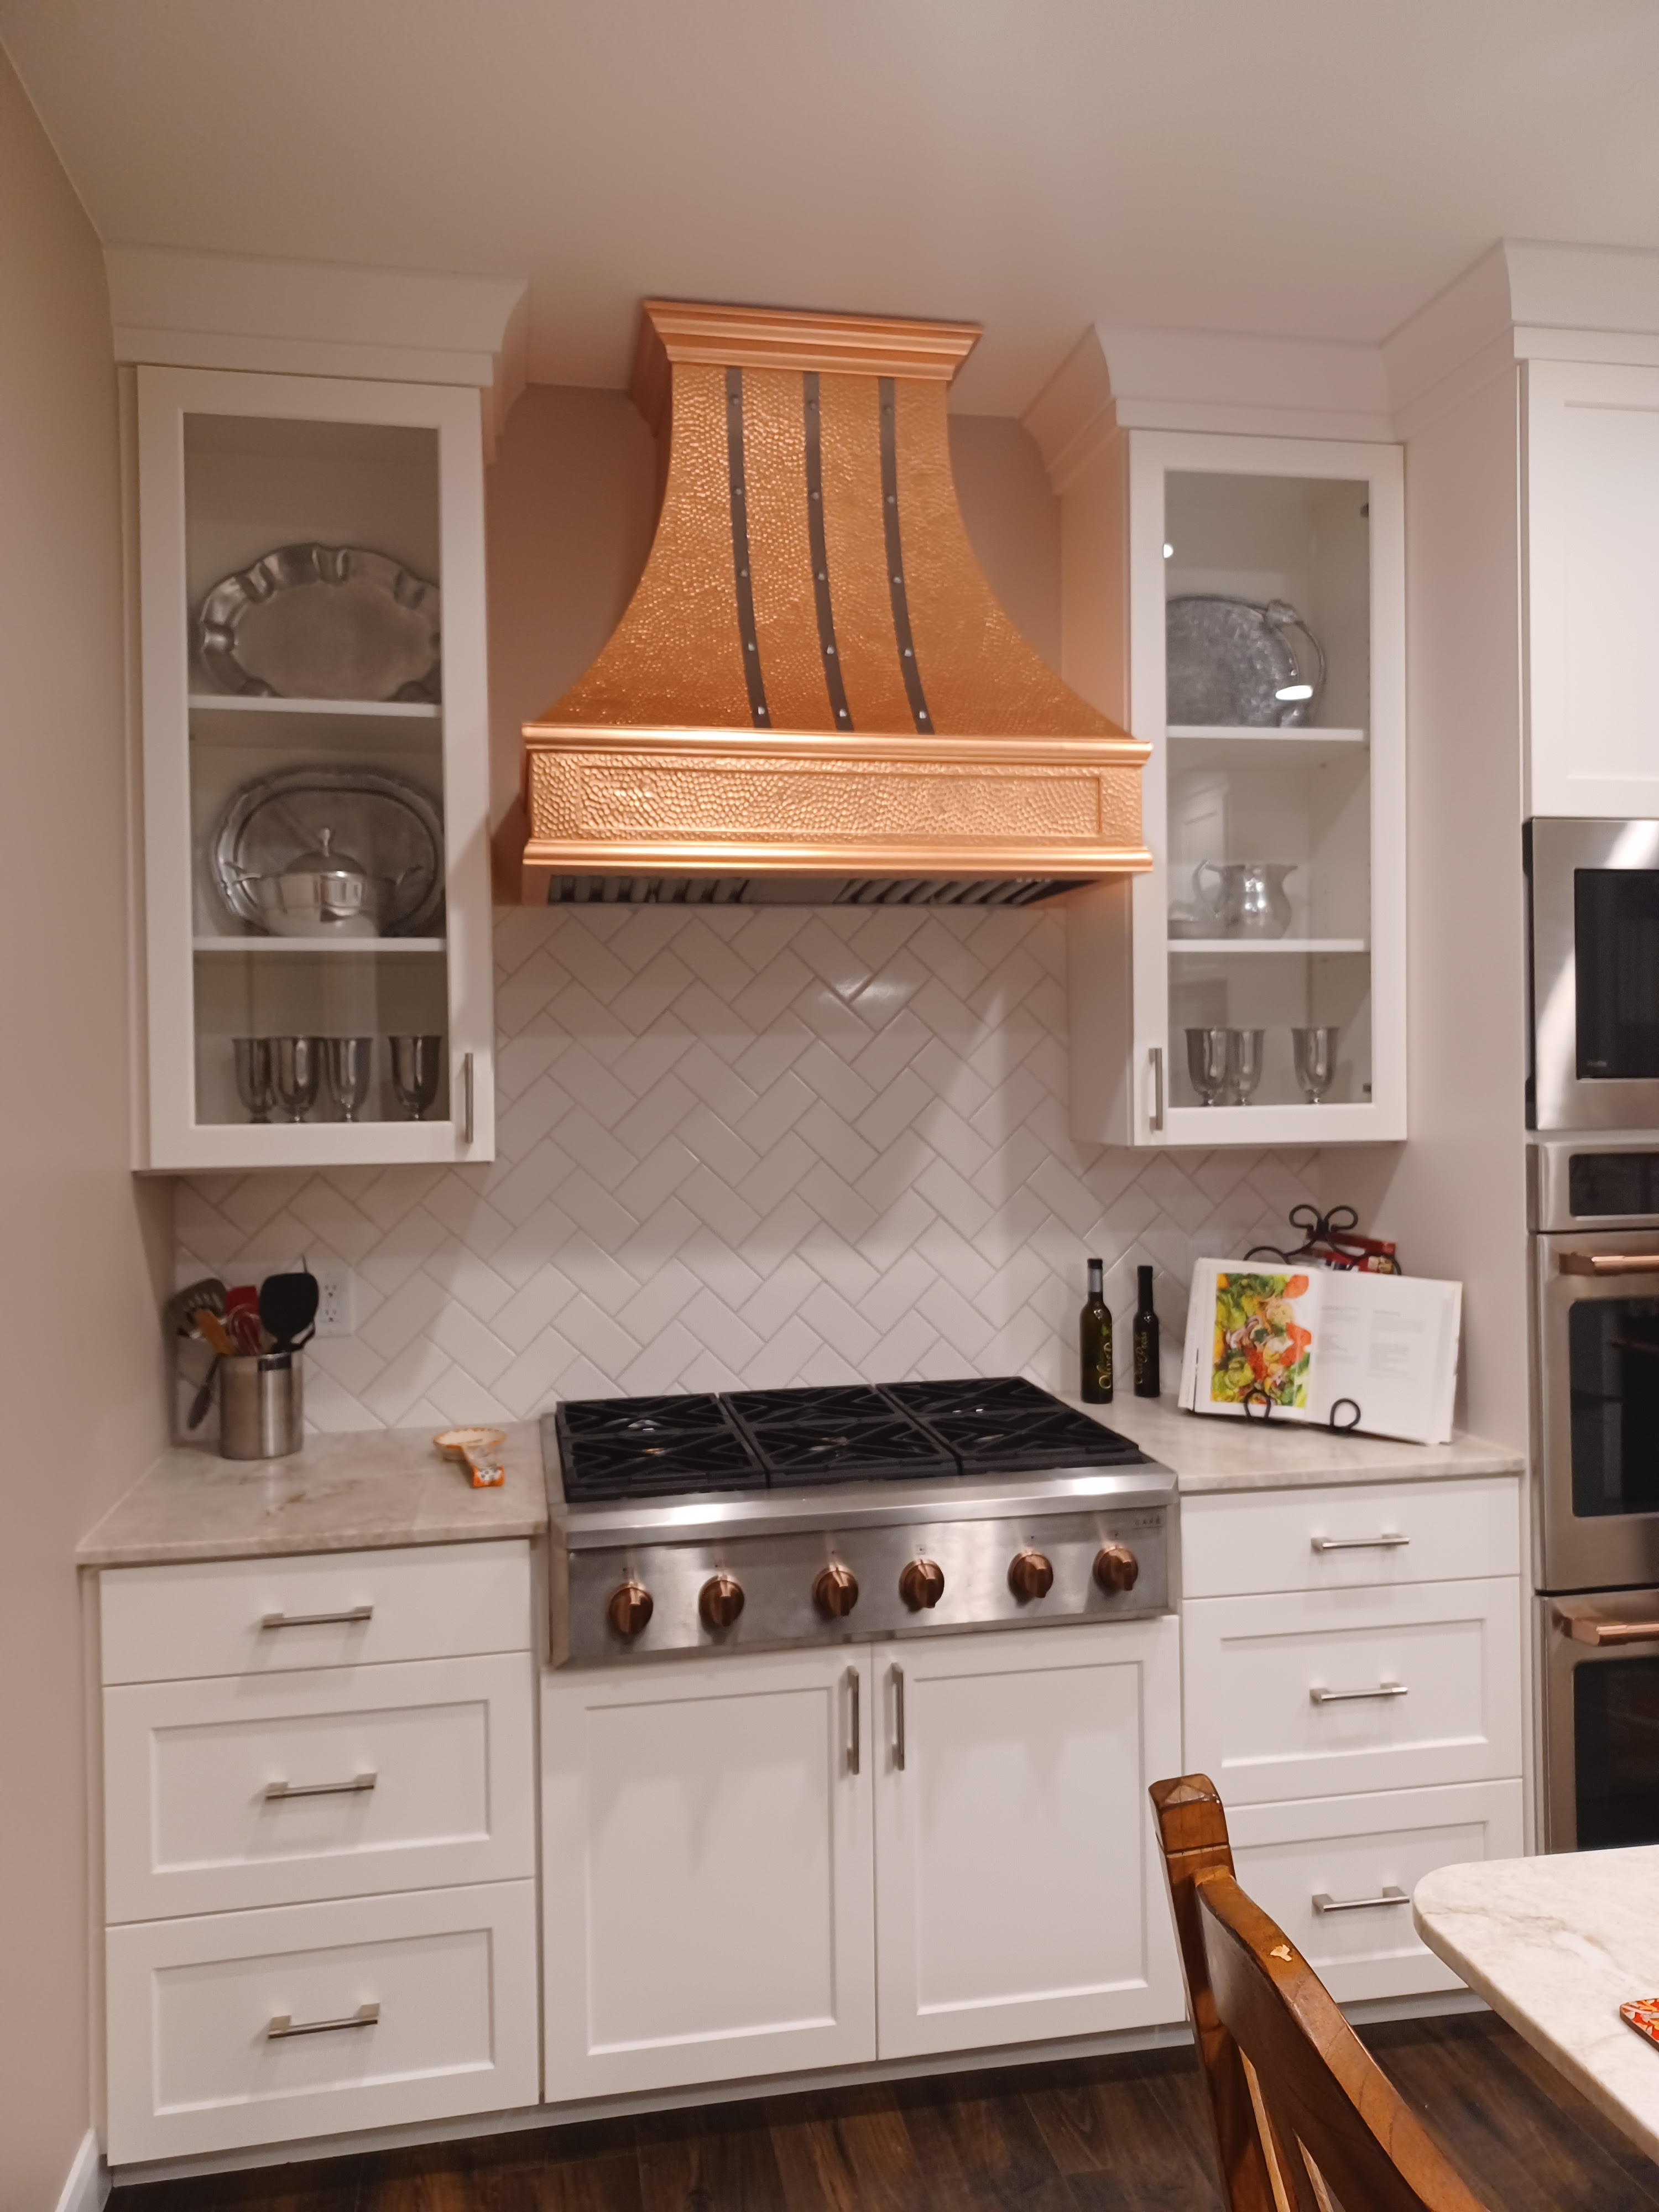 Luxurious marble backsplash kitchen design idea with hood options, elegant kitchen designs, white kitchen cabinets,white kitchen countertops